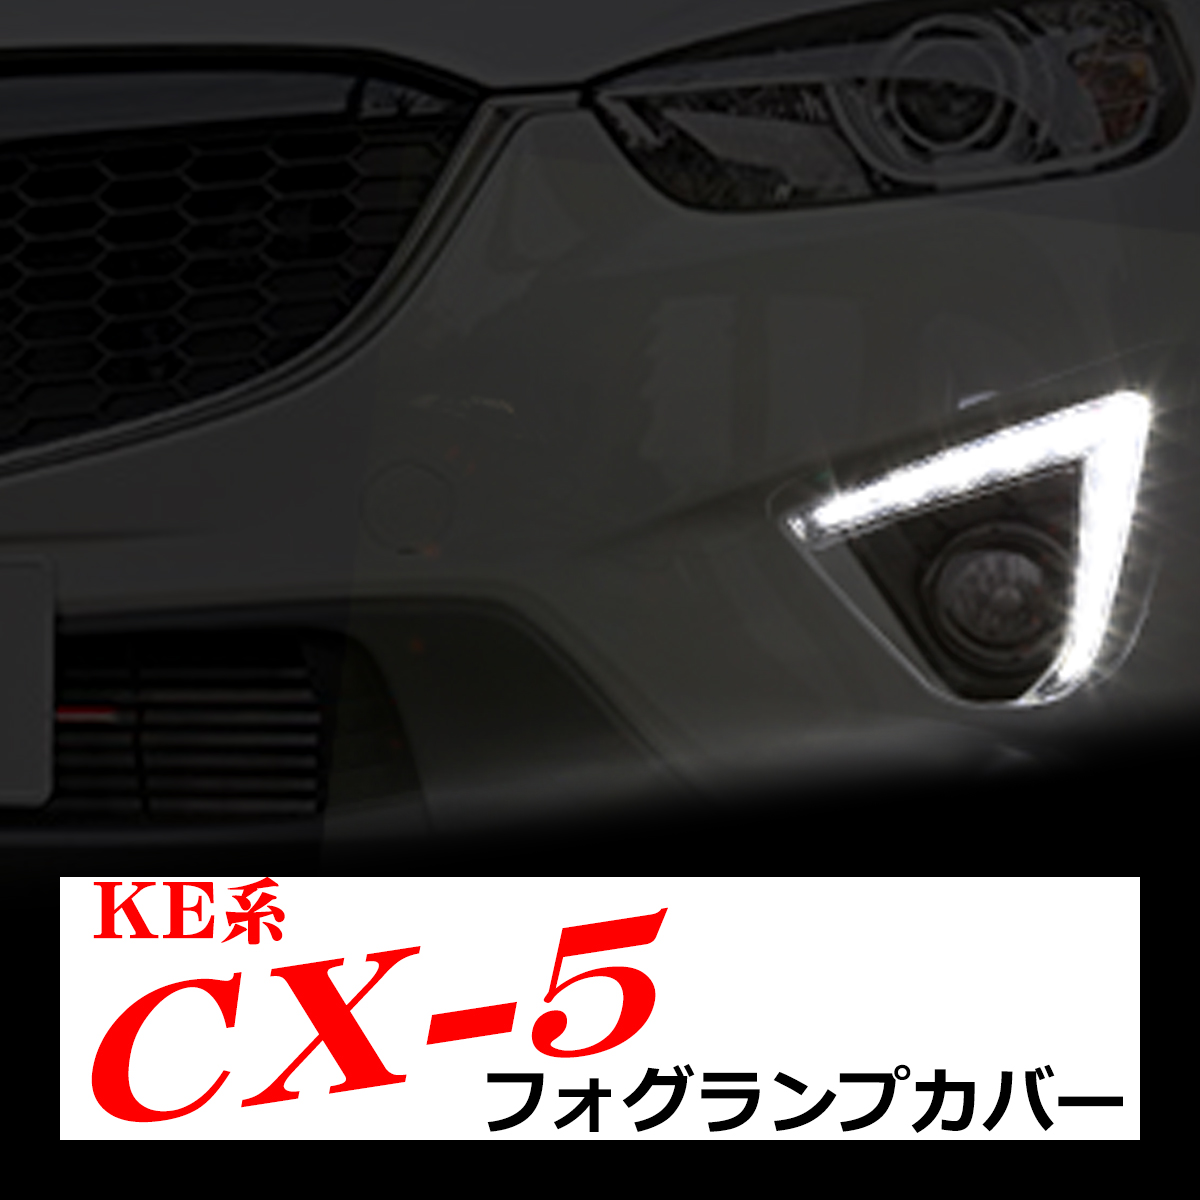 CX-5 LEDデイライト KE系 マツダ 純正交換用フォグランプカバー 夜間用 減光機能付き PZ384